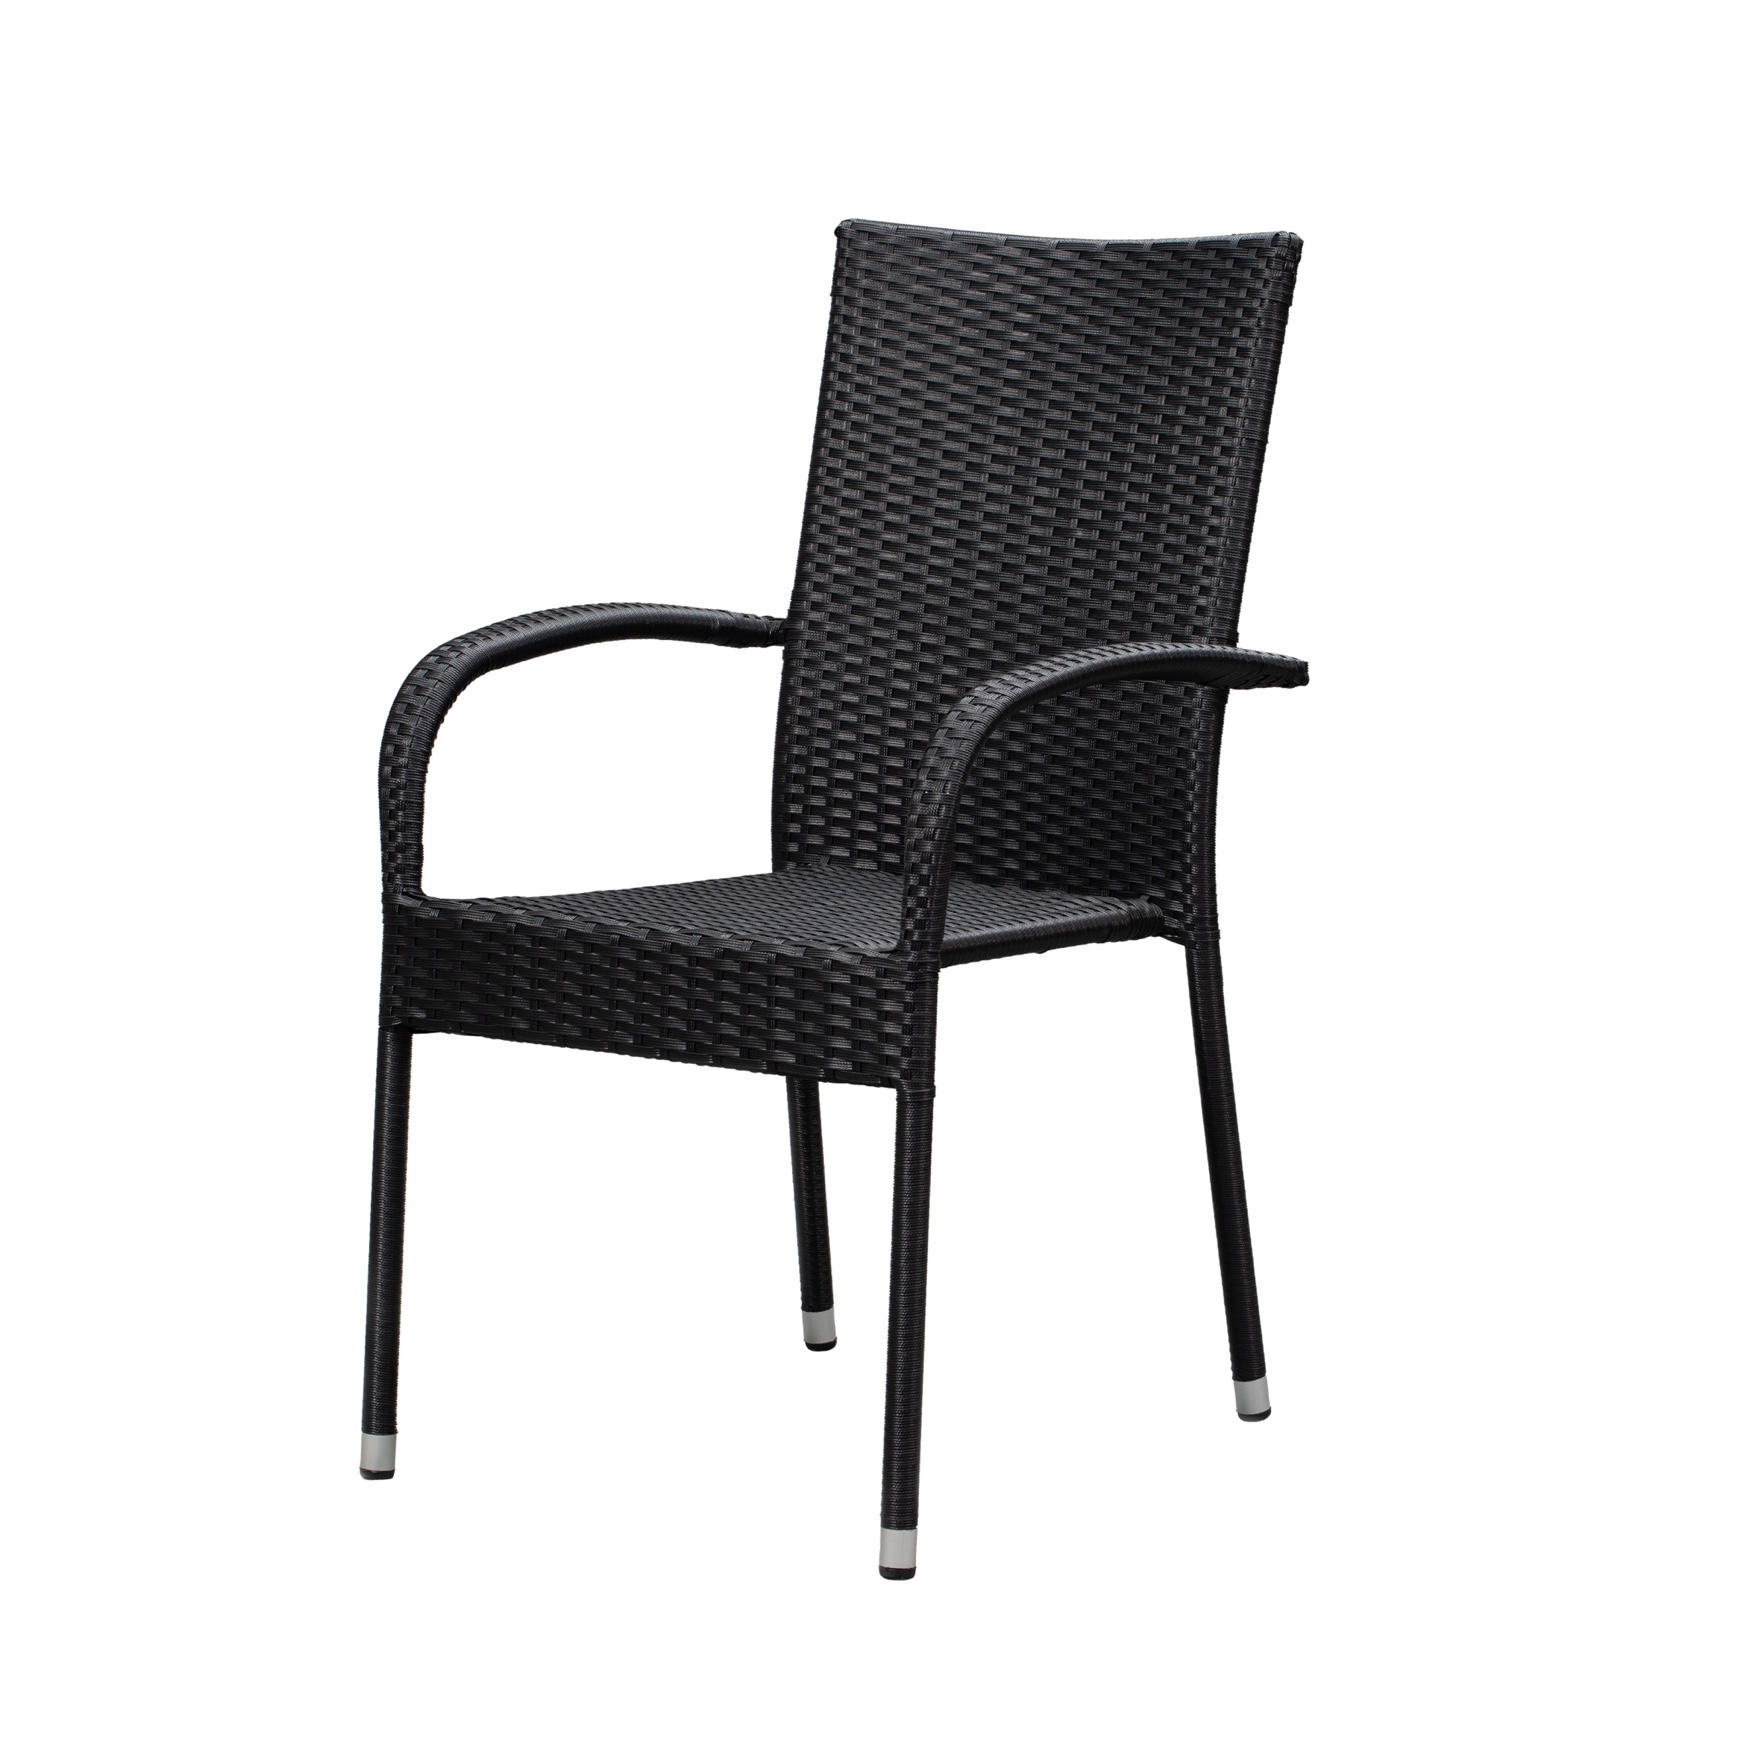 Morgan Outdoor Wicker Stacking Chair - Black - Set of 4, BLACK